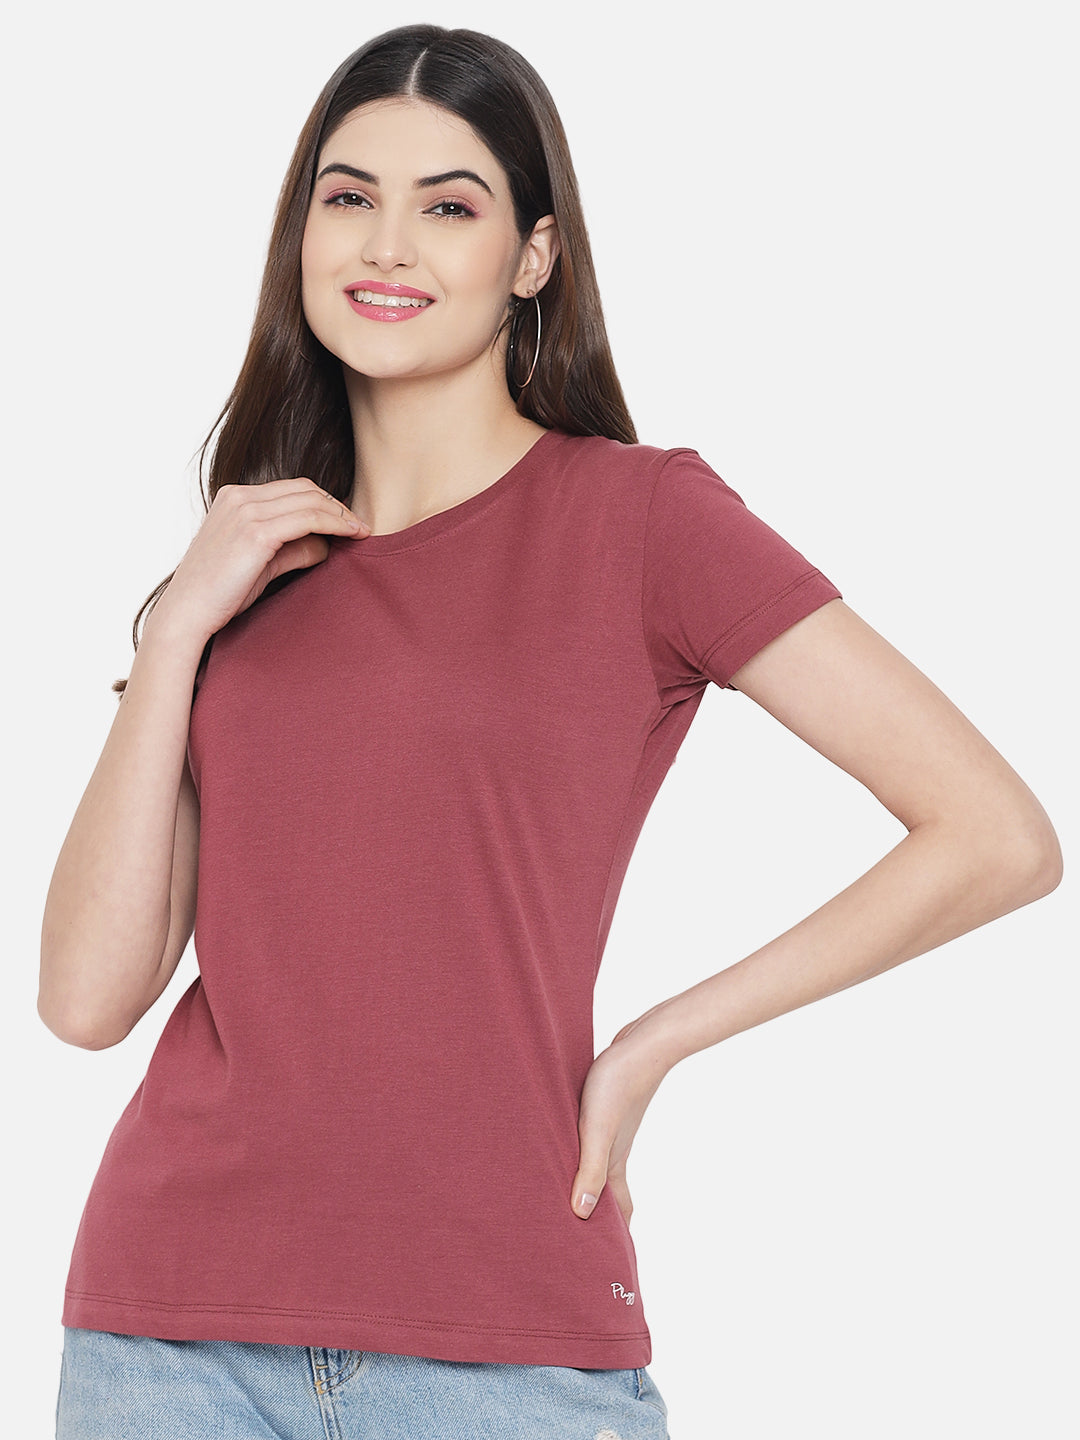 Round Printed Ladies T Shirt With Shorts, Half Sleeves at Rs 160